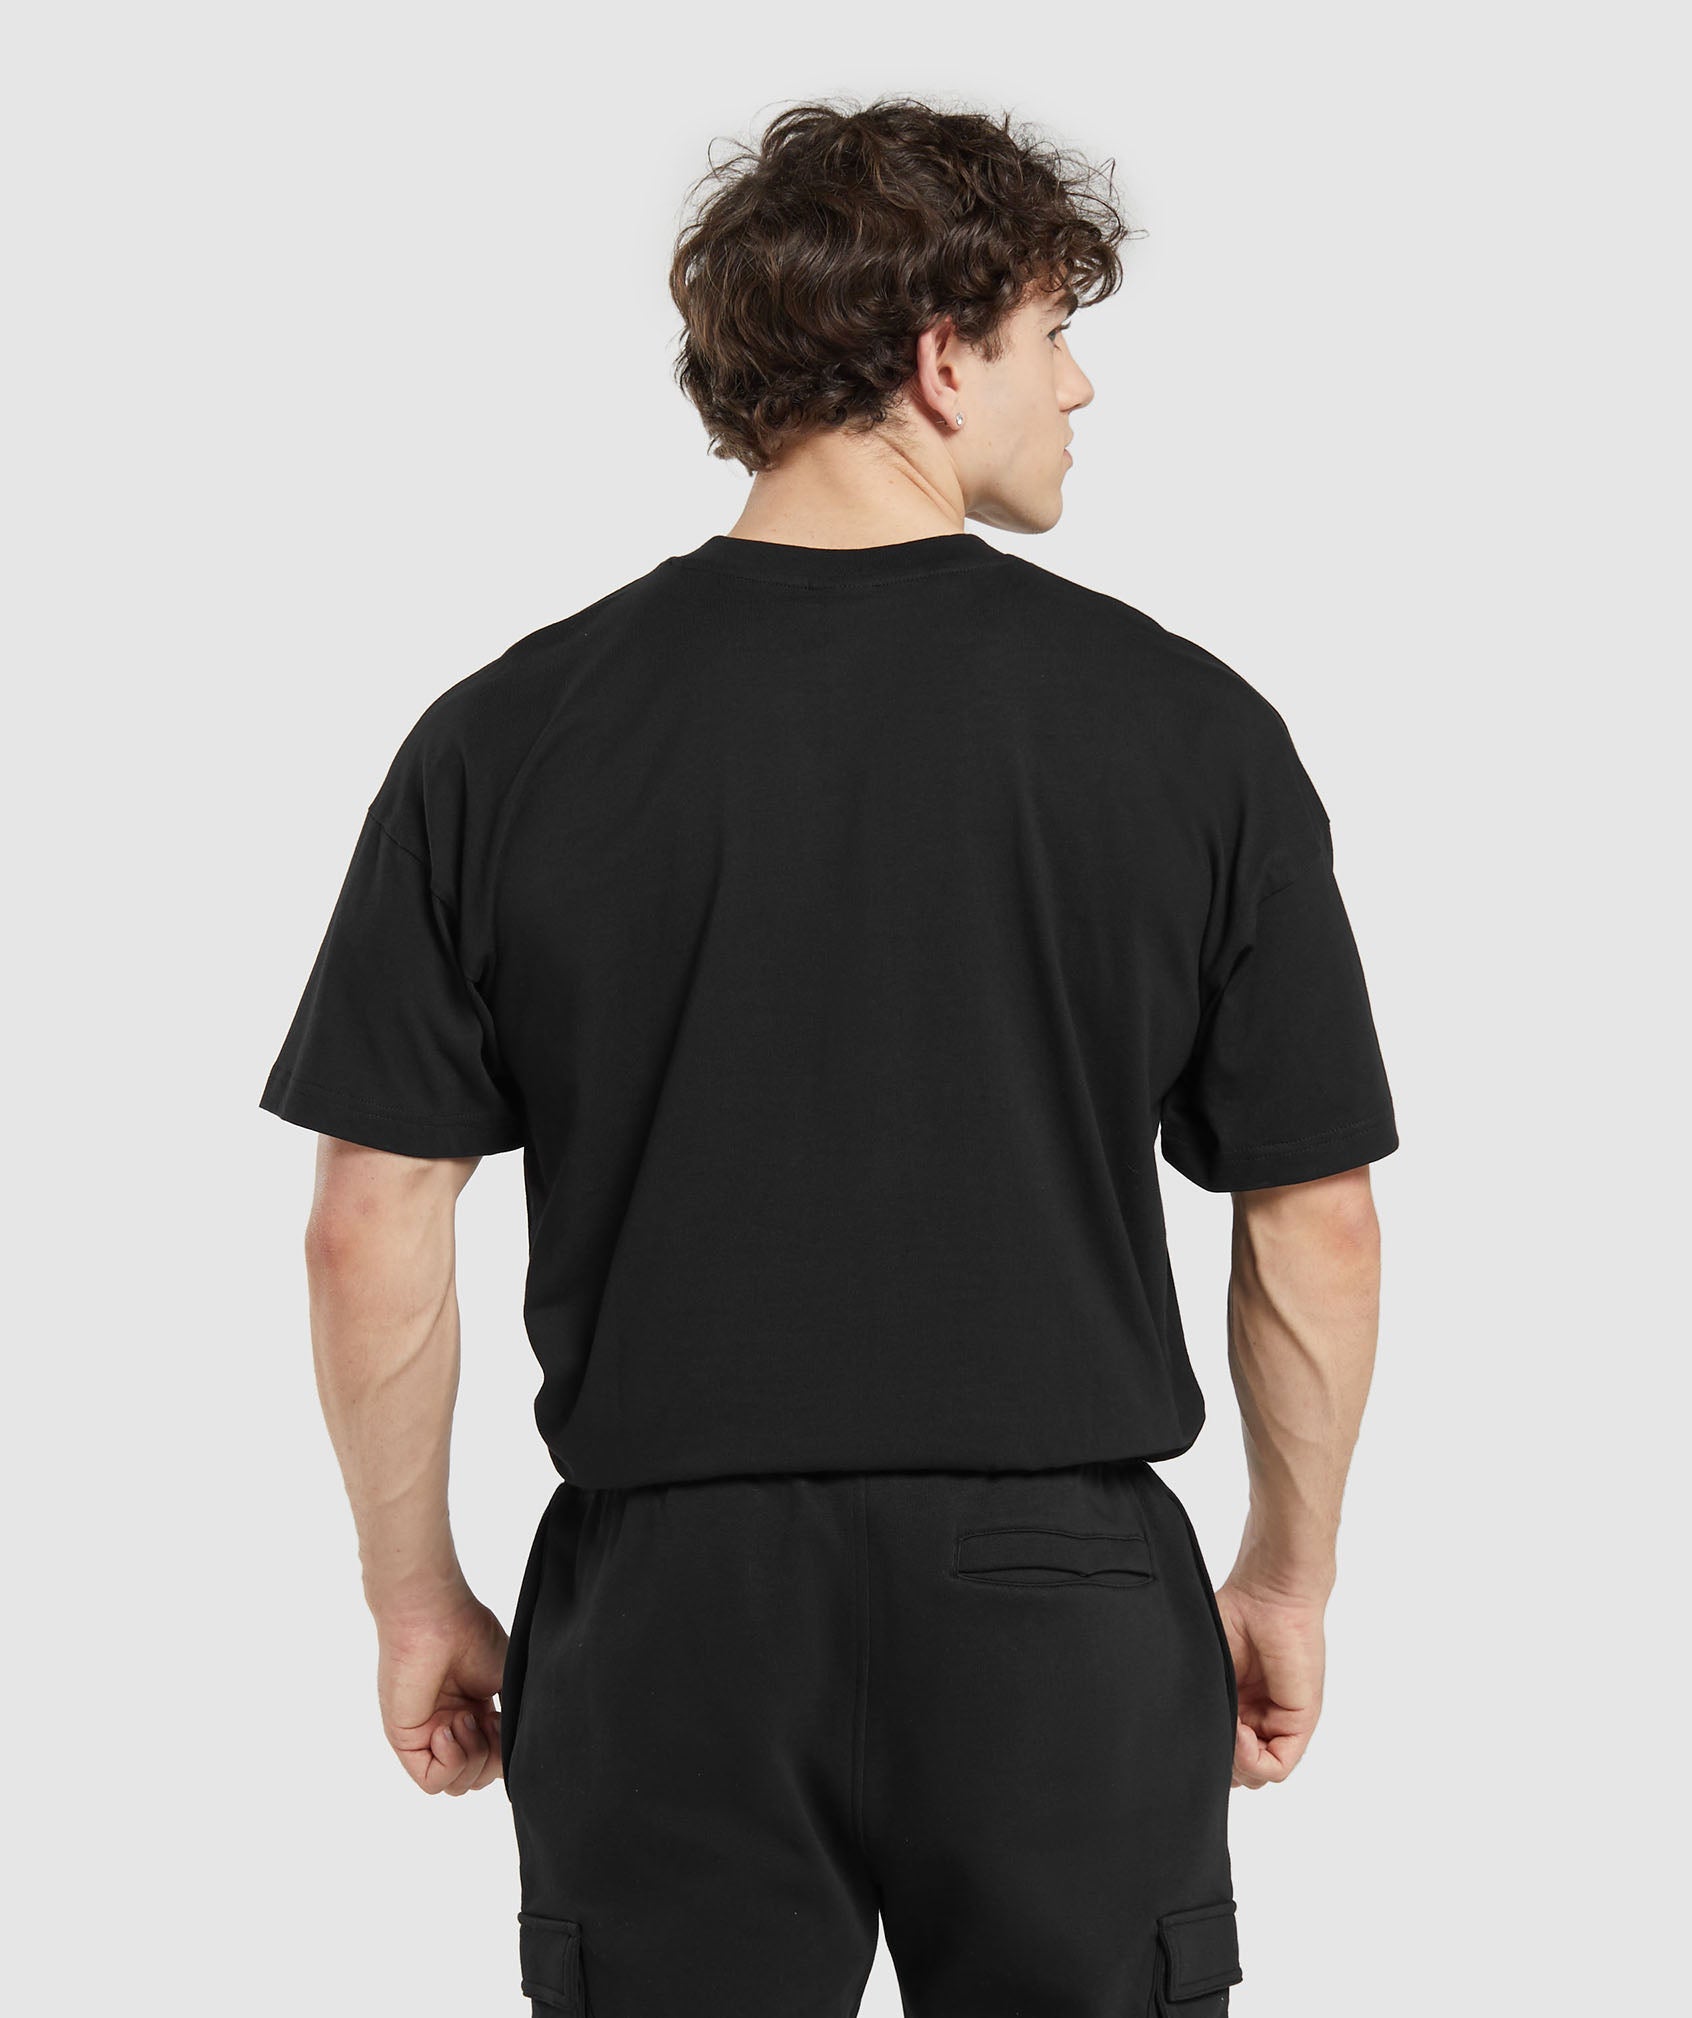 Lifting Apparel T-Shirt in Black - view 2